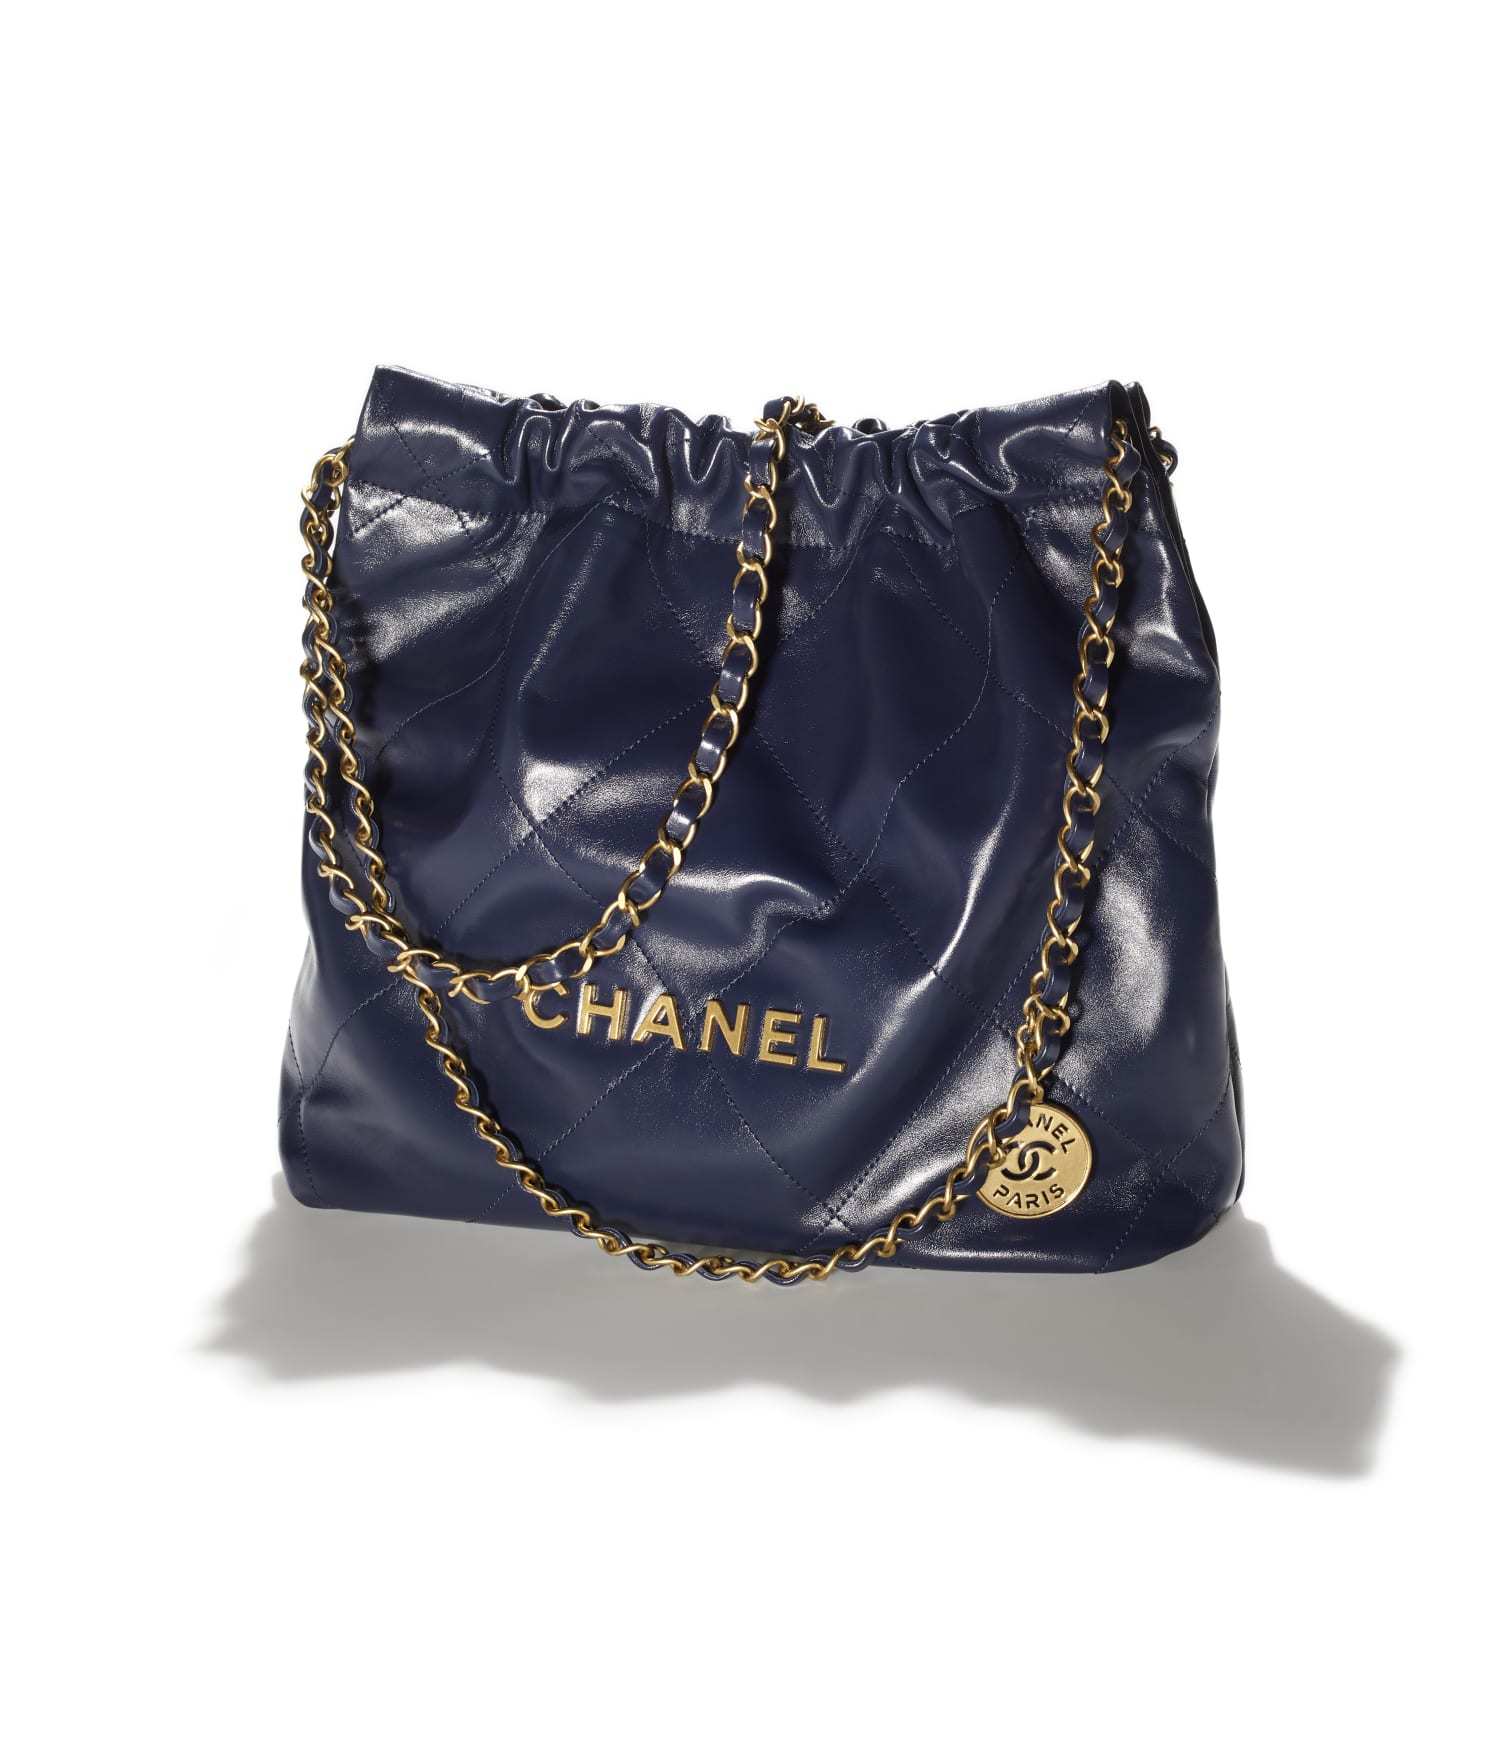 Bolso Chanel 22, de Chanel.